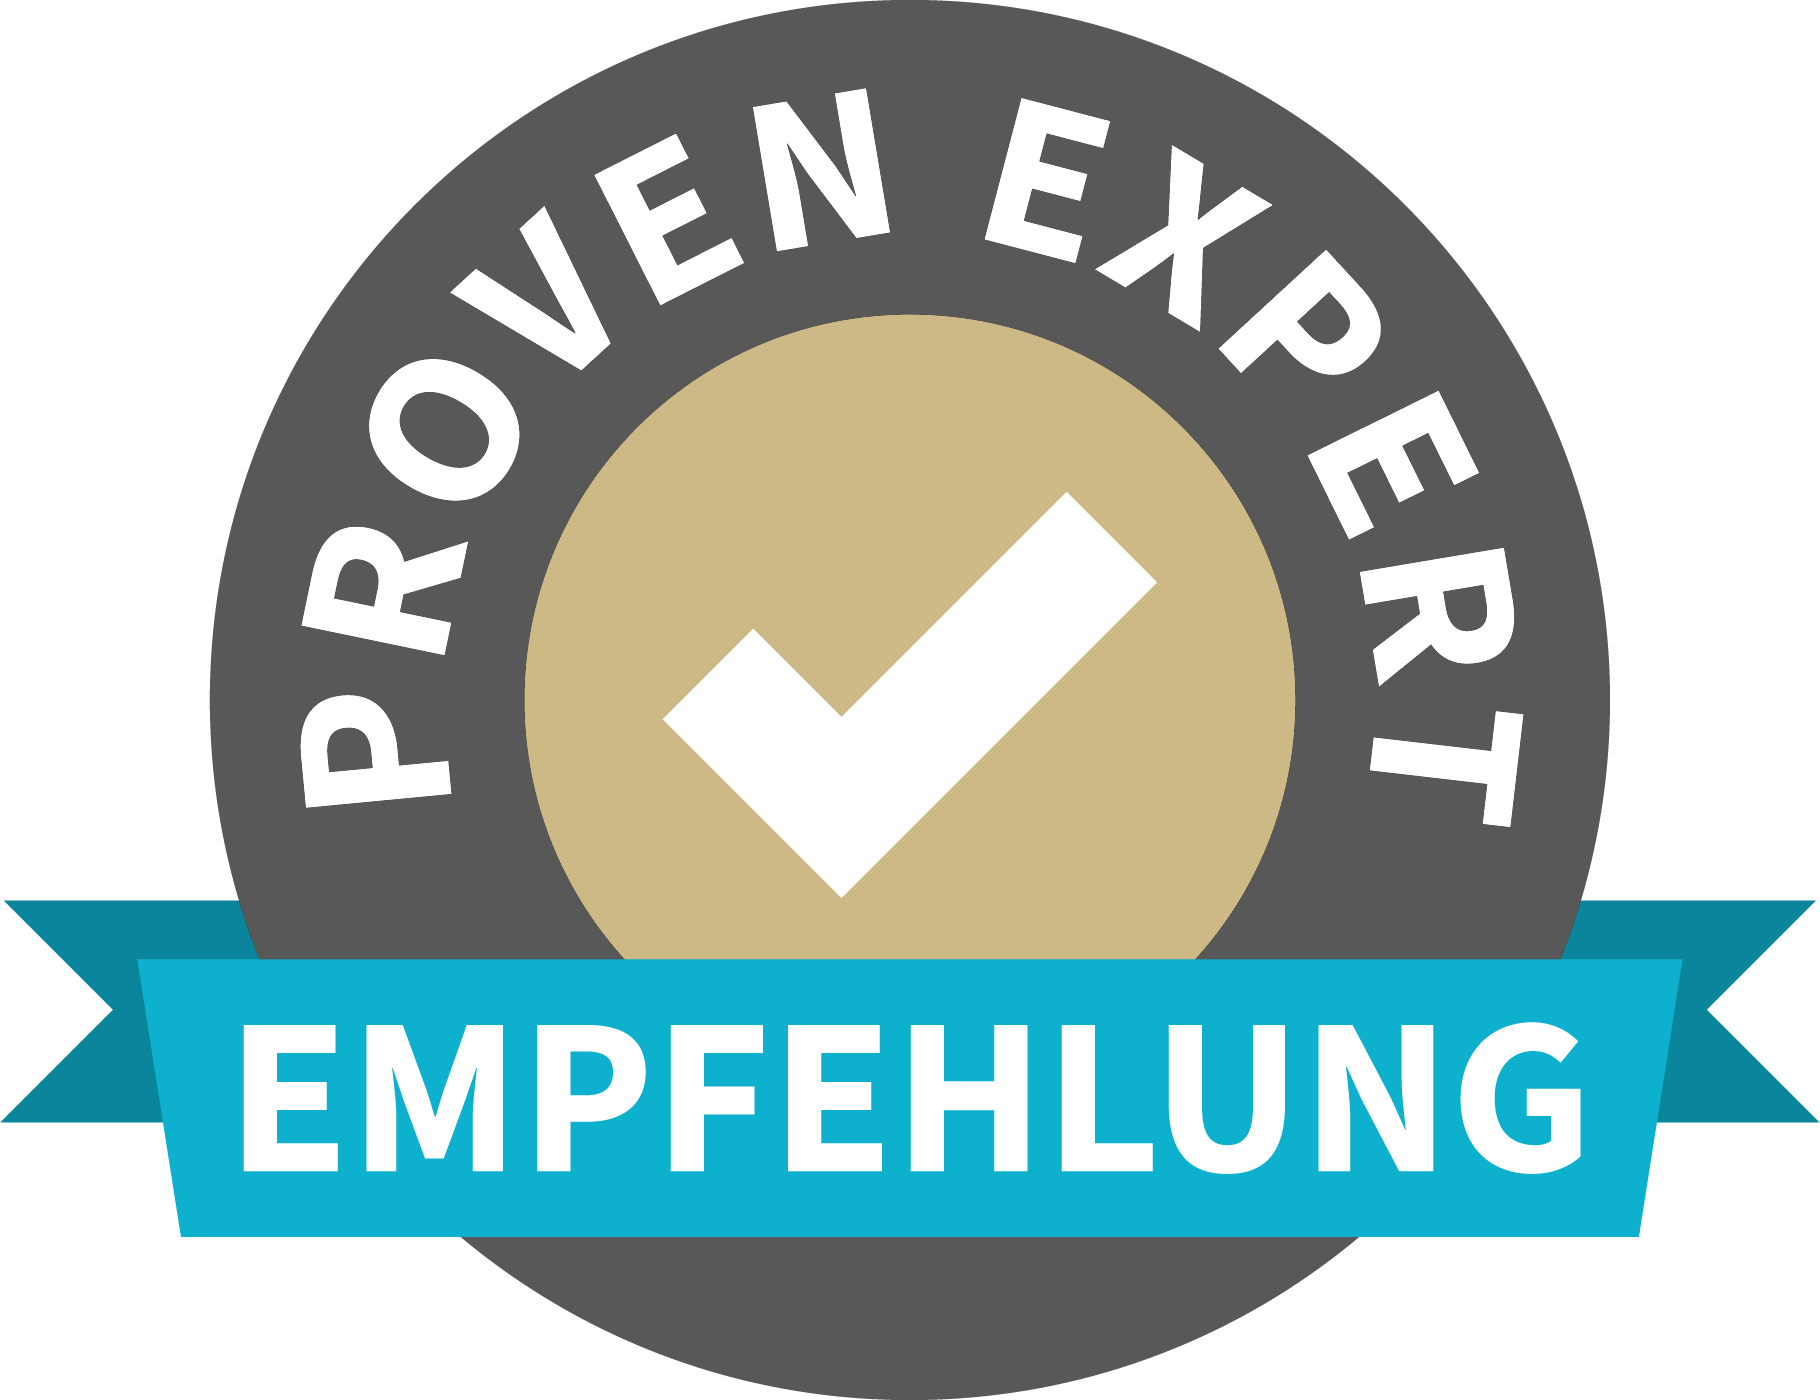 Proven Expert logo